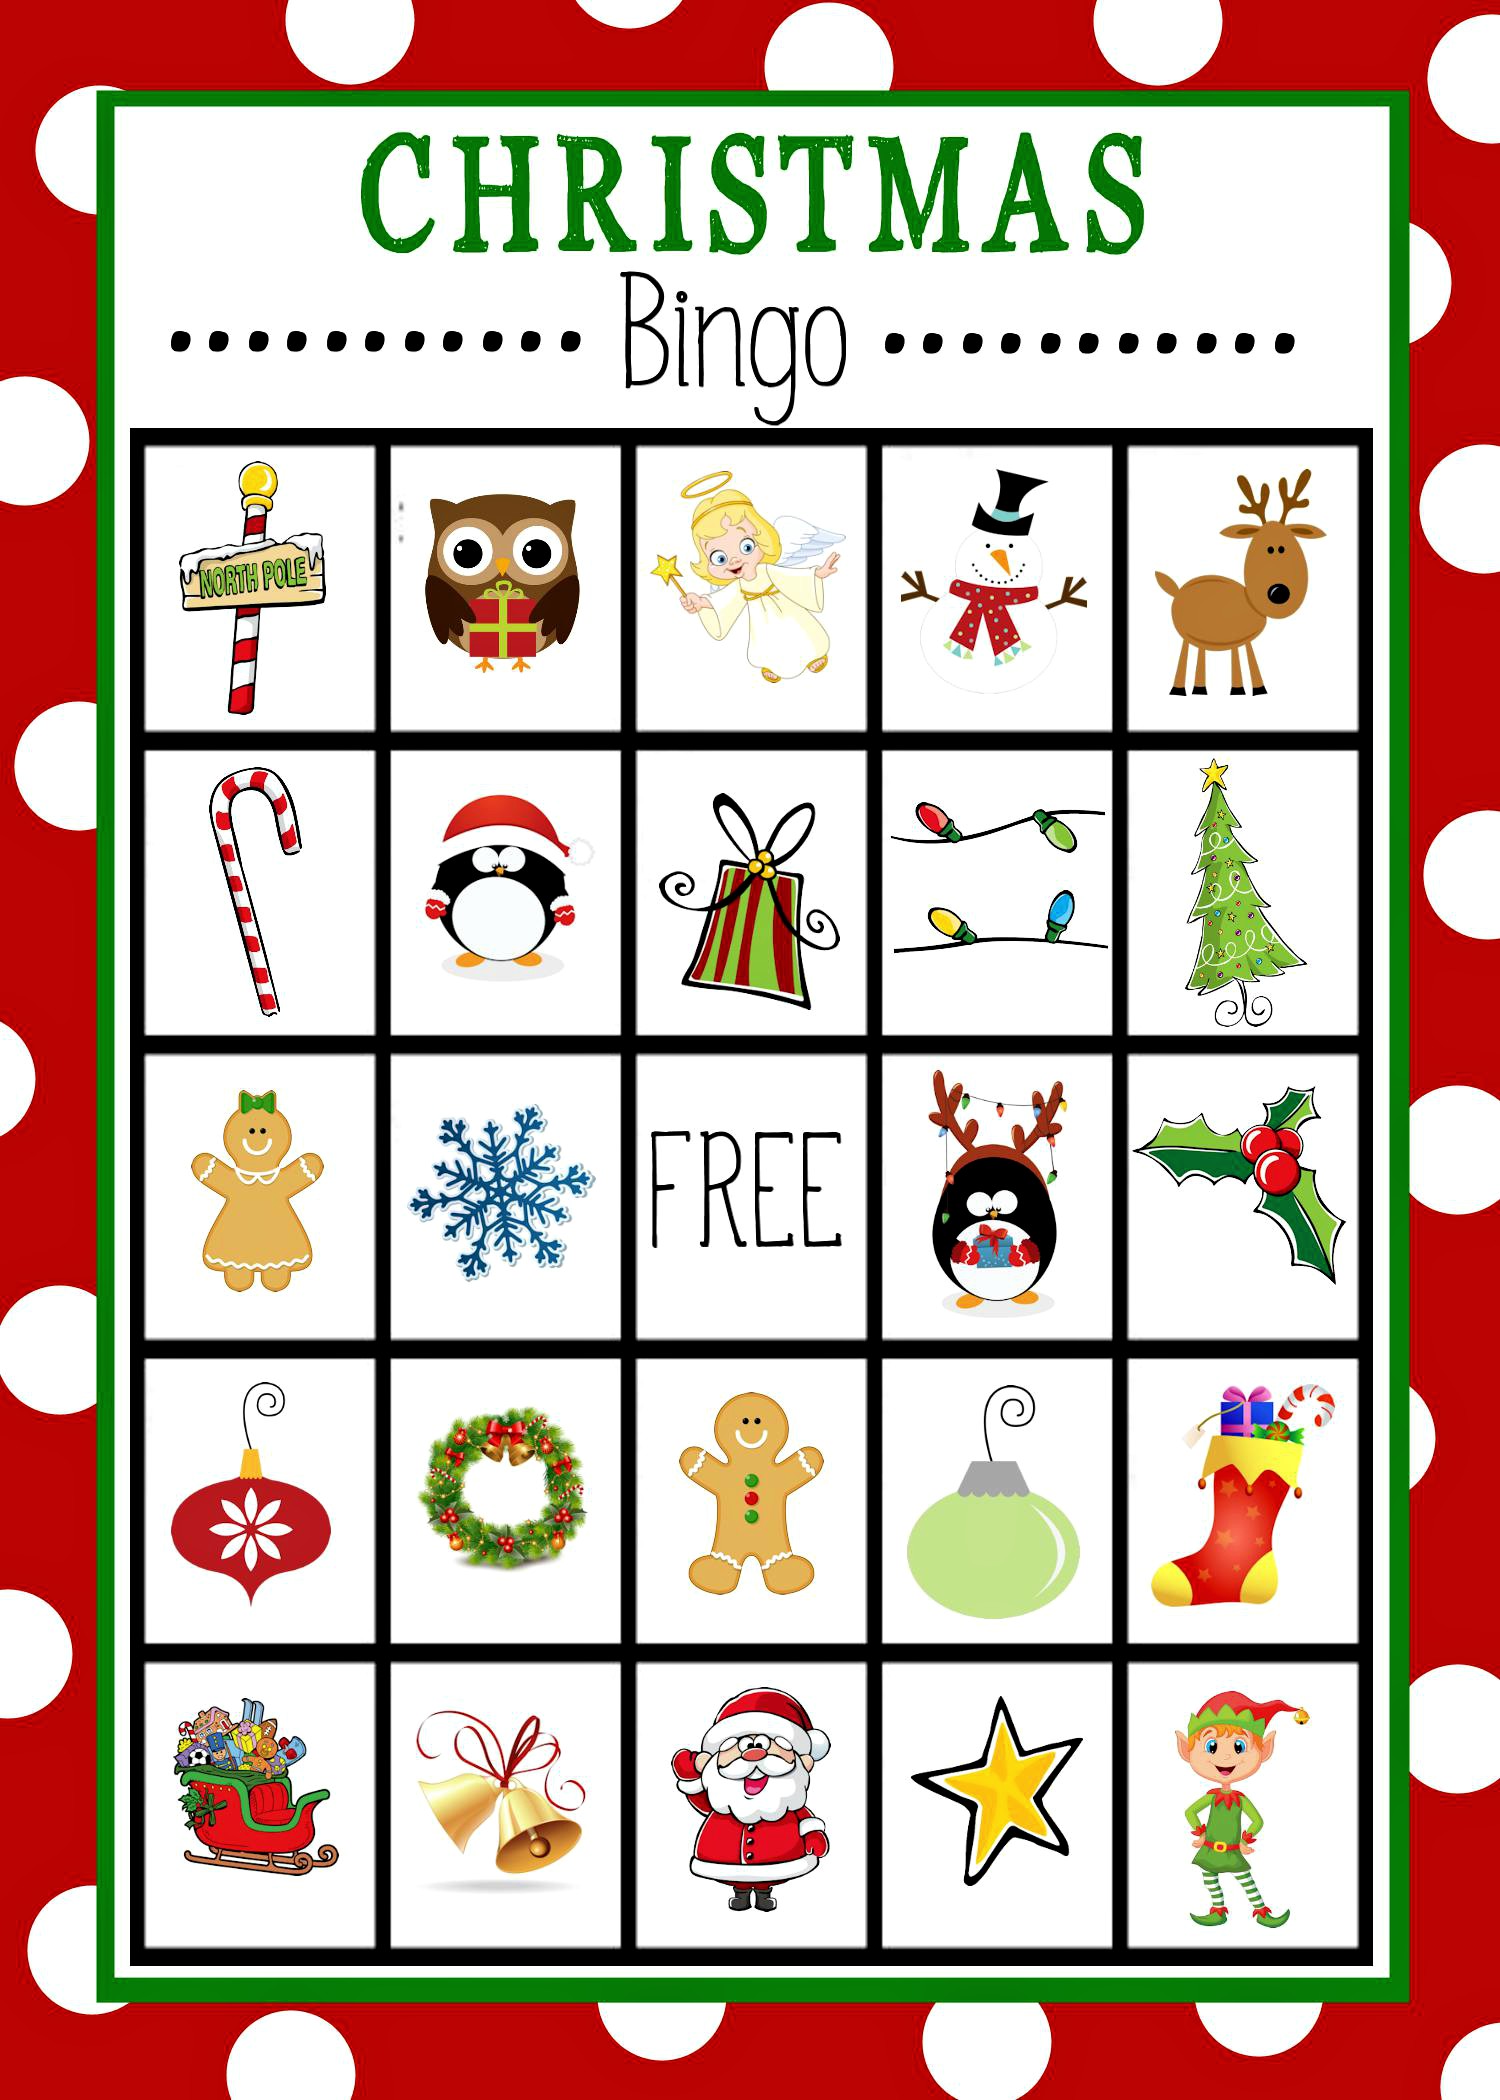 random-bingo-card-how-to-play-bingo-land-based-online-games